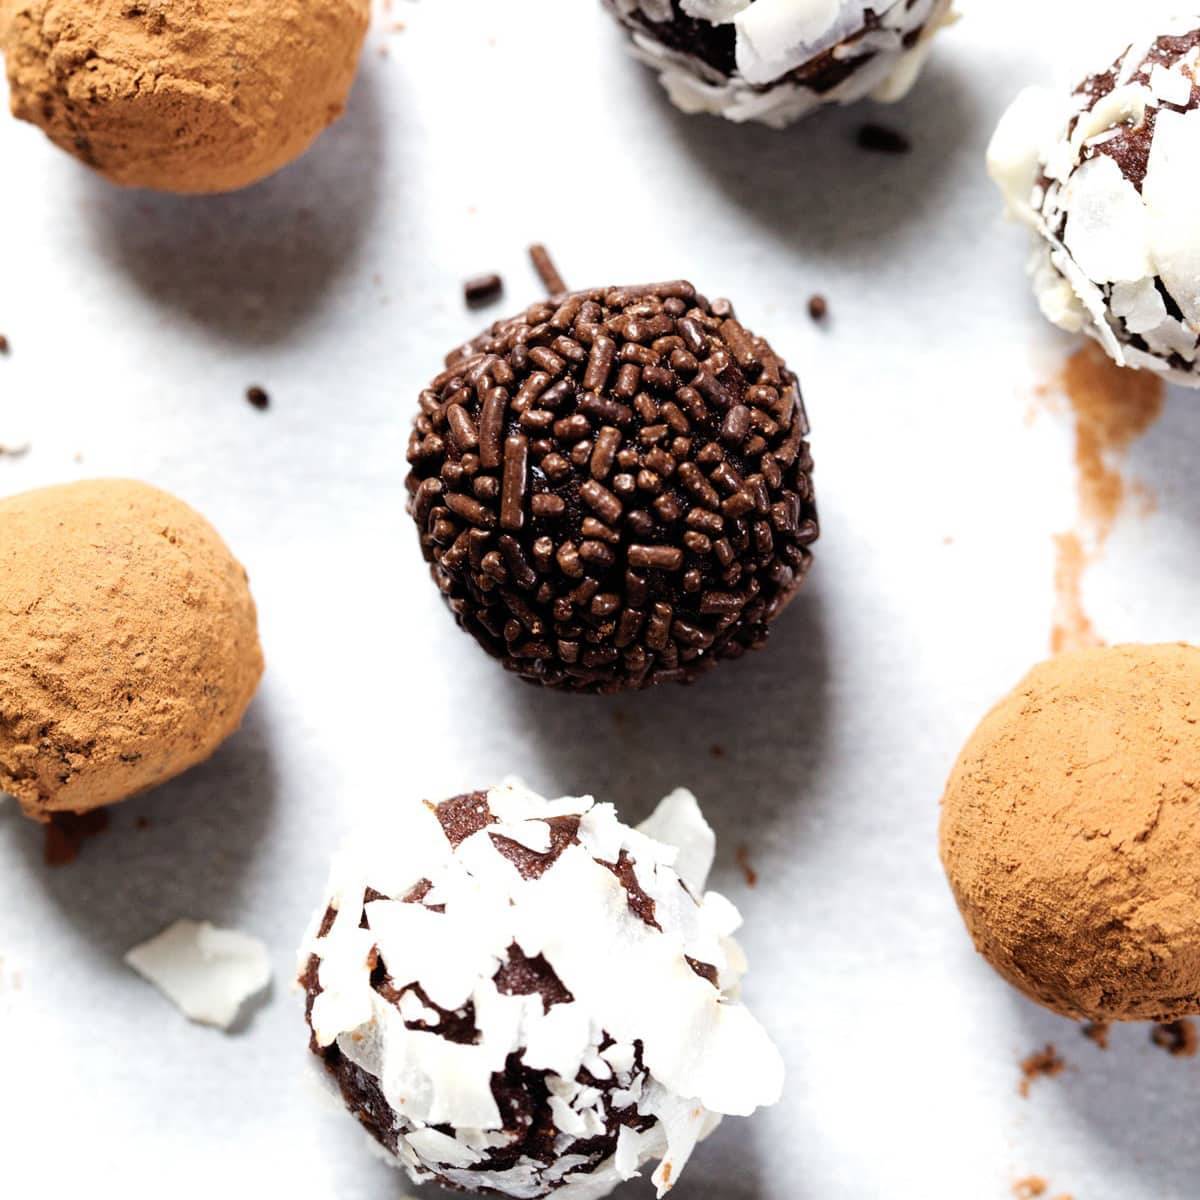 Boozy chocolate truffles give holiday treats a much-needed kick